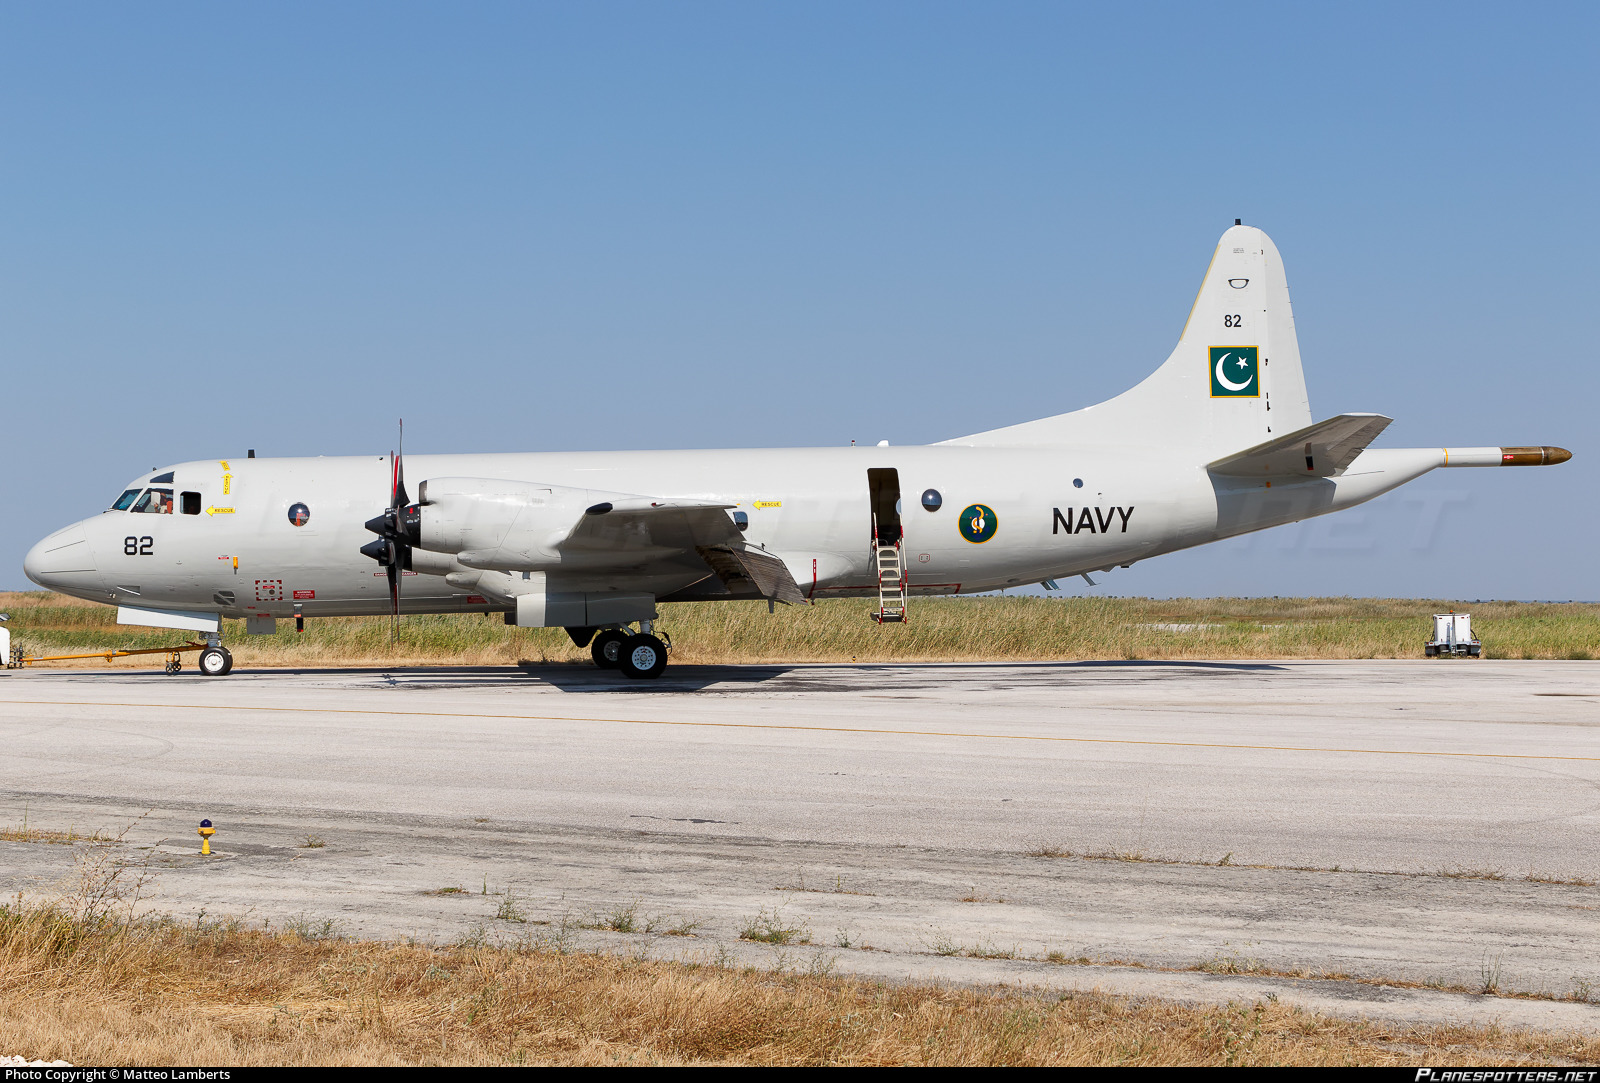 82-pakistan-navy-lockheed-p-3c-orion_PlanespottersNet_1098470_63f0a87c09_o.jpg